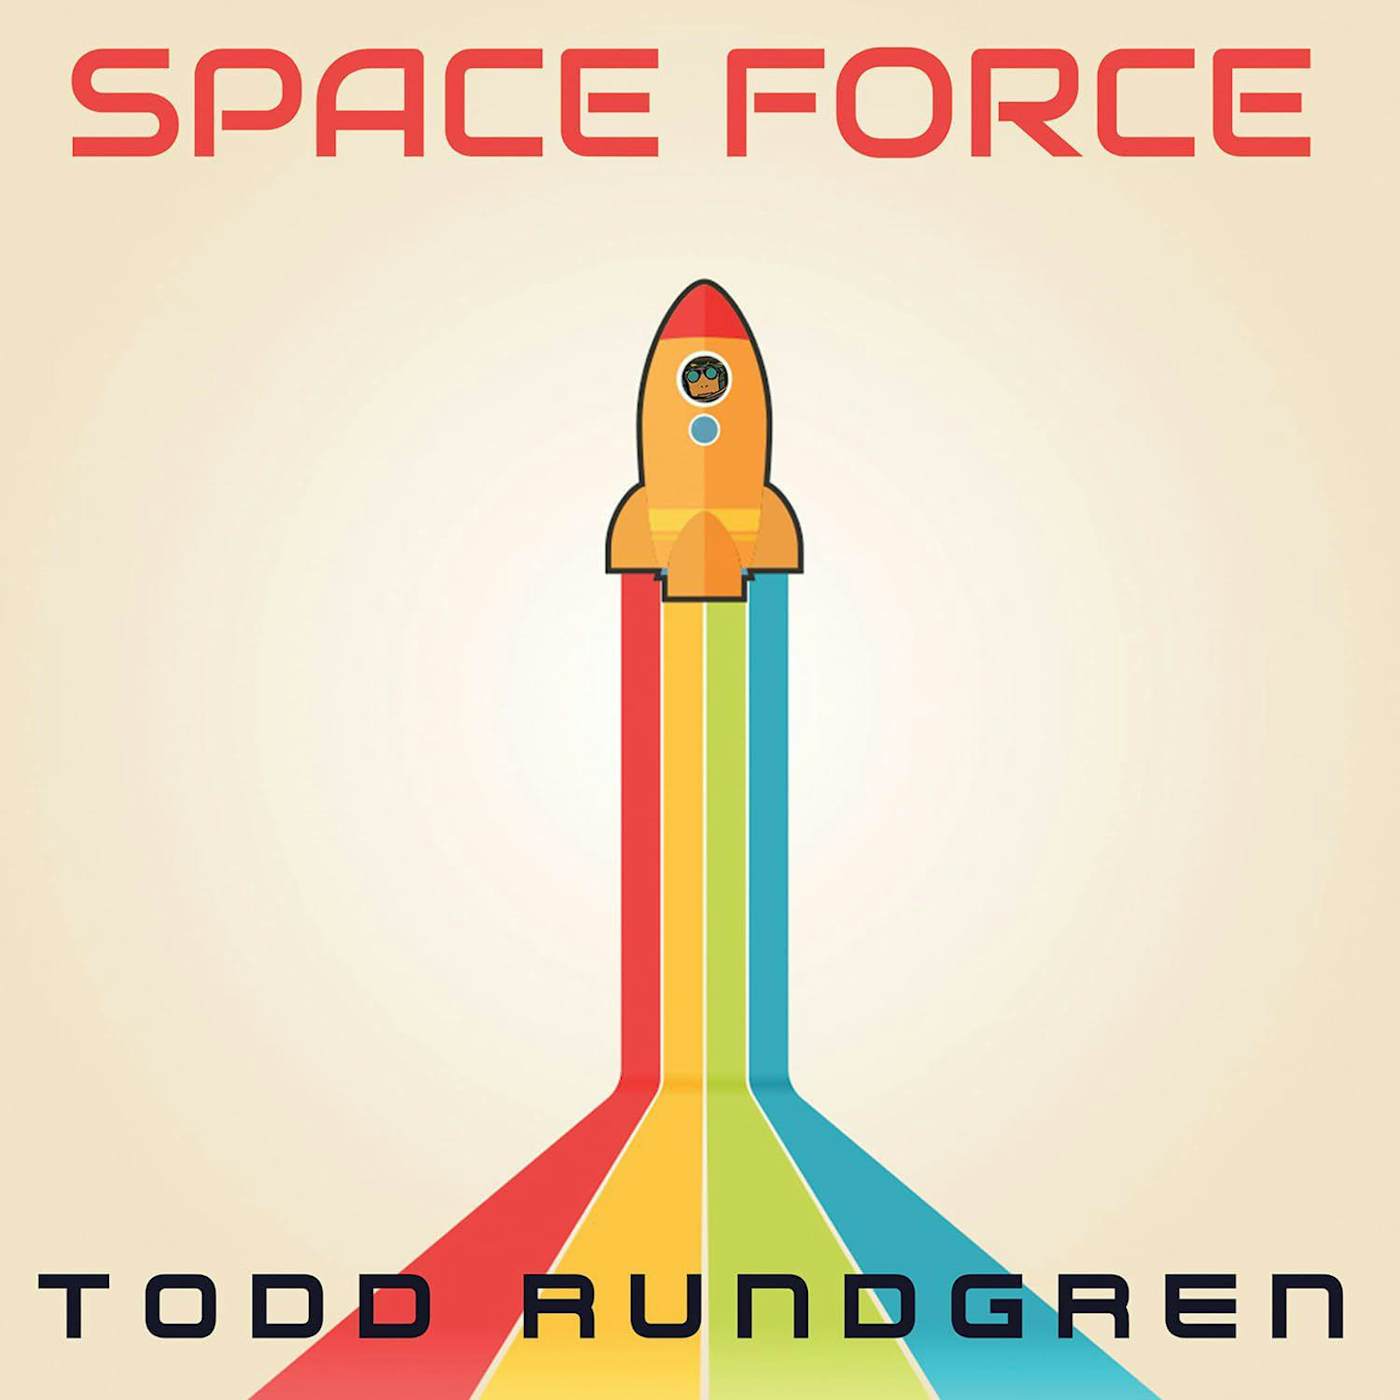 Todd Rundgren SPACE FORCE (RED VINYL) Vinyl Record